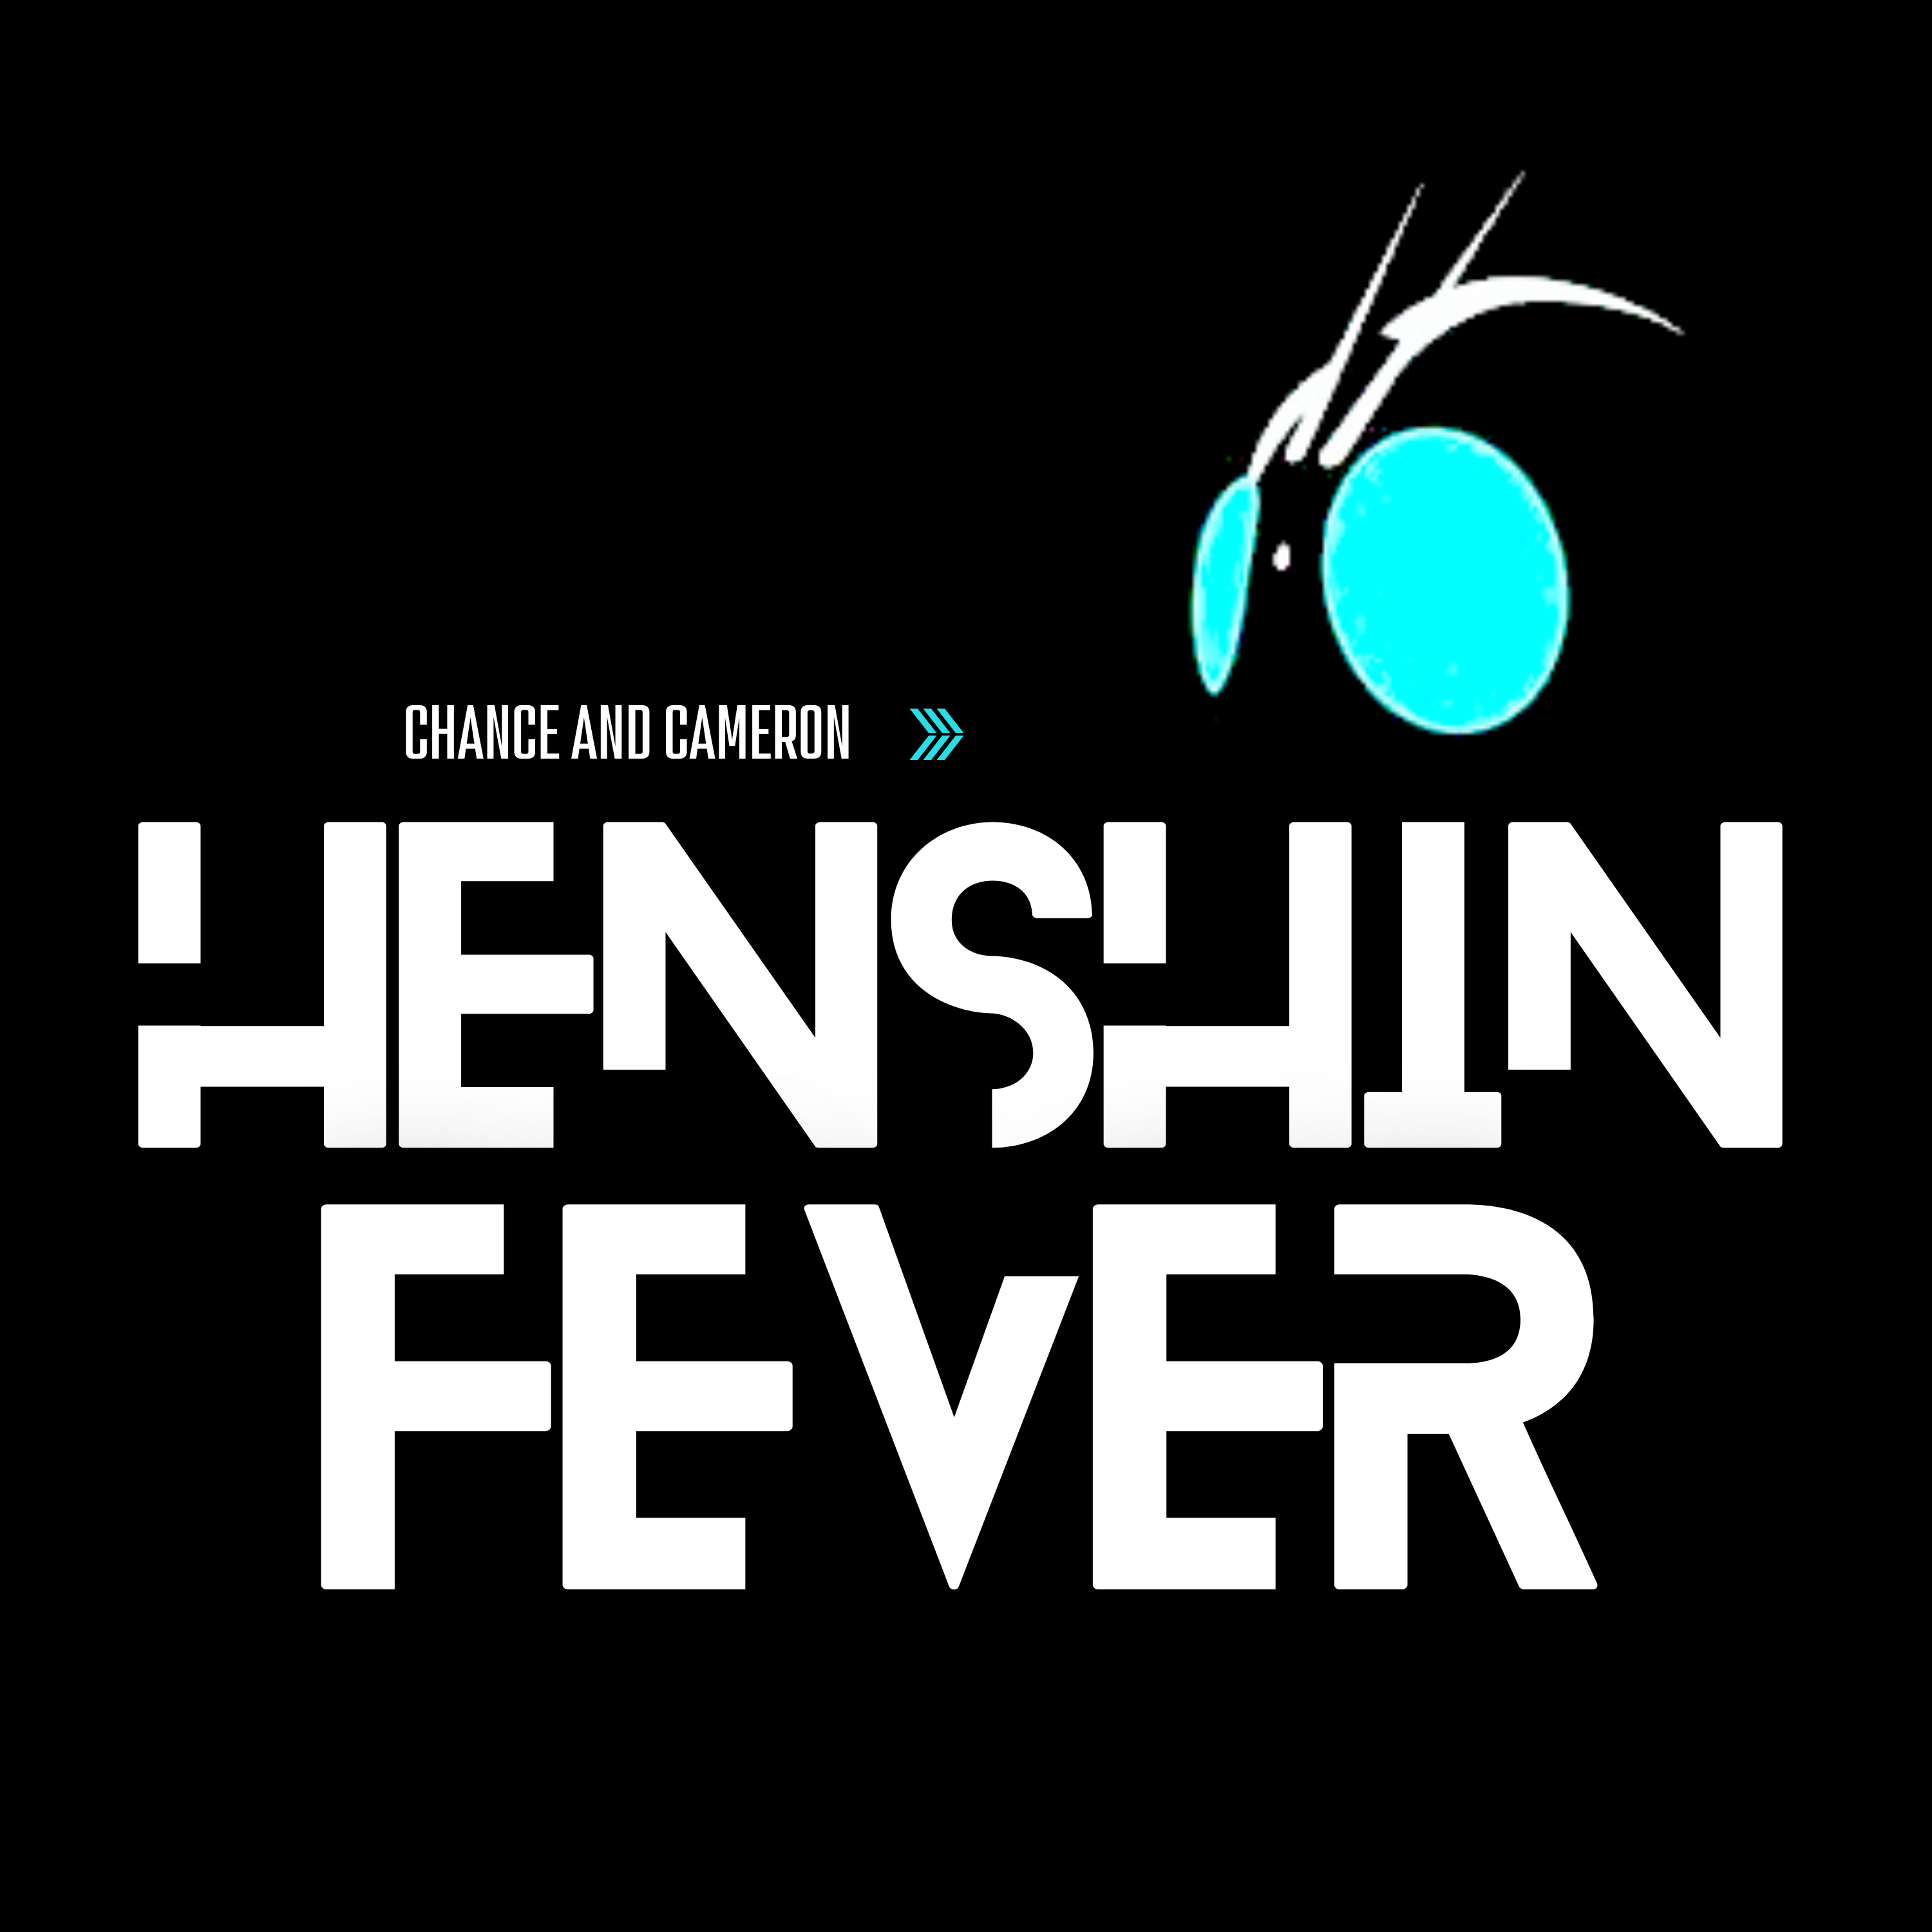 Gotchard Episodes 11 & 12 - Henshin Fever